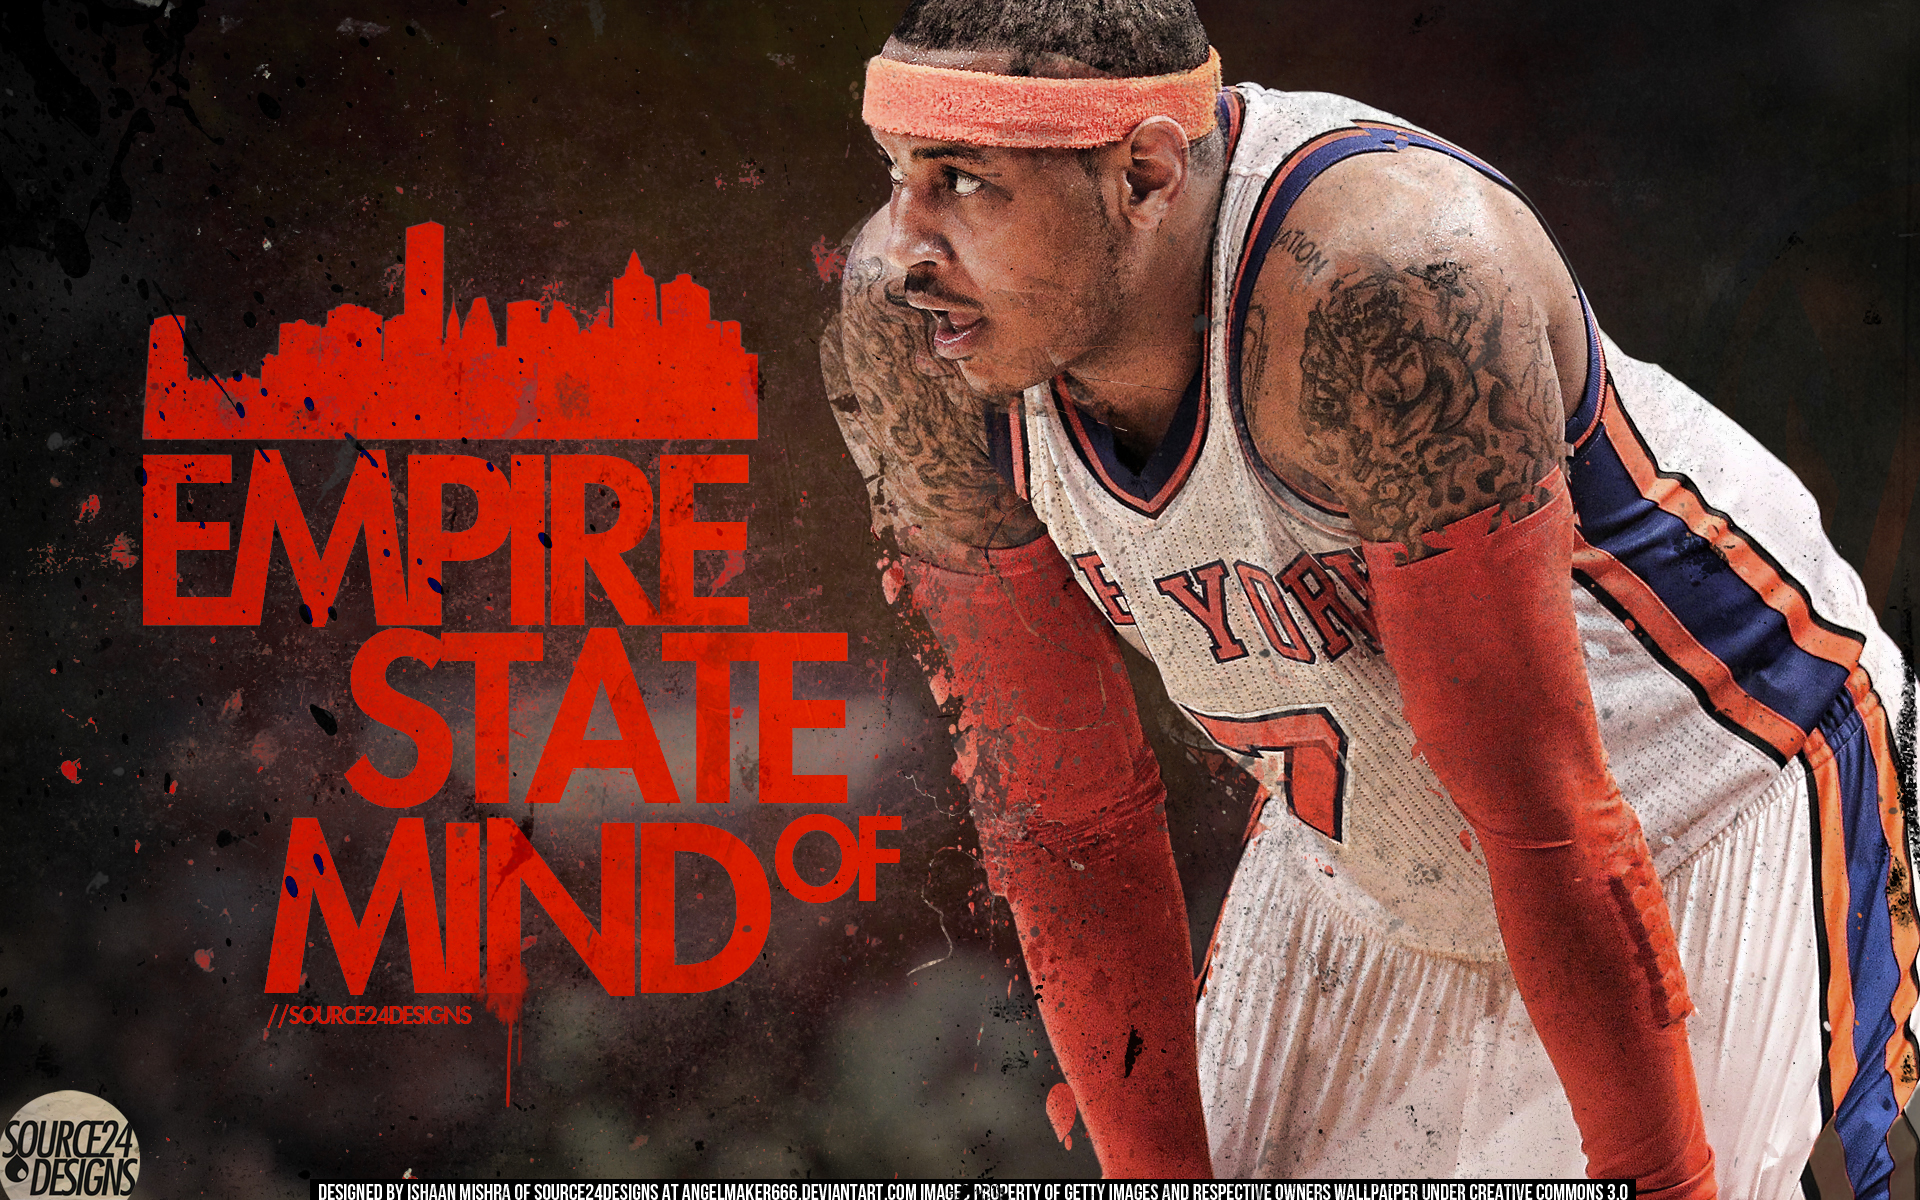 Ny Knicks Wallpaper 2012